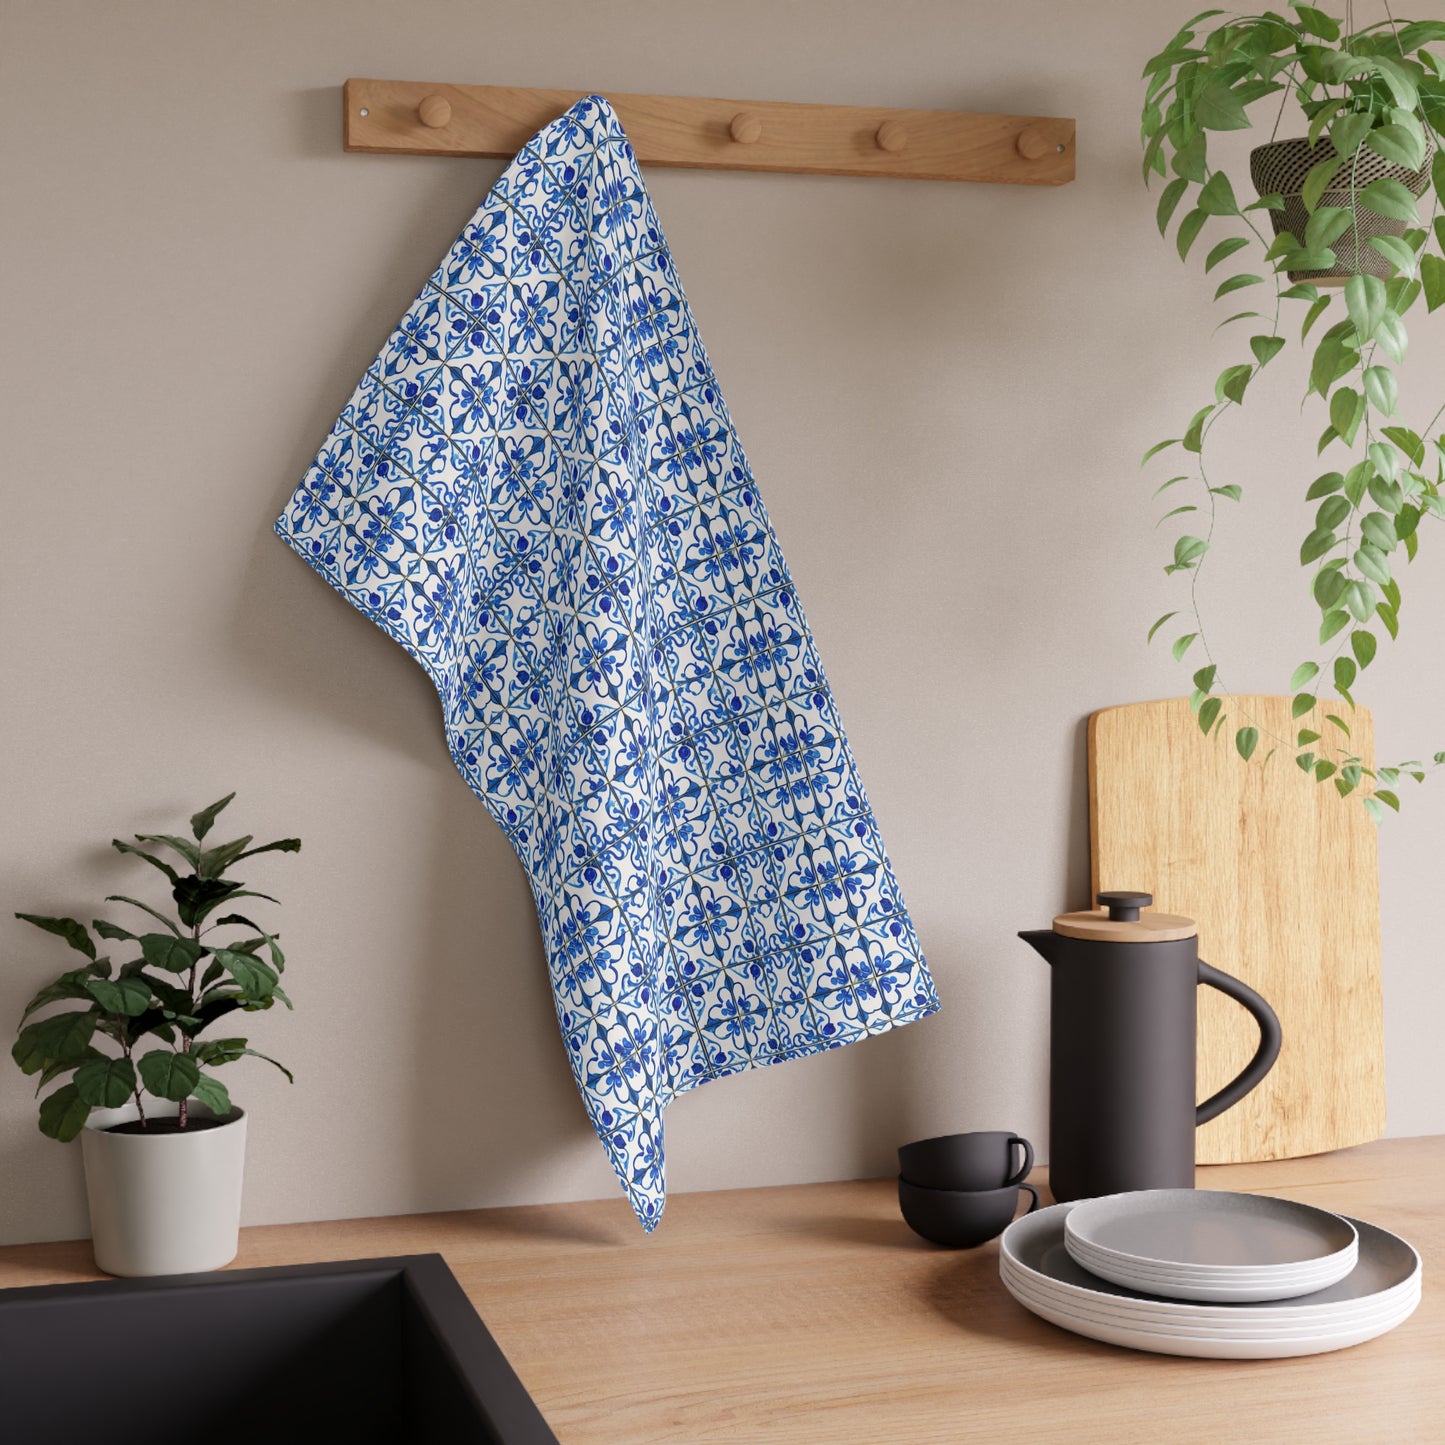 Amsterdam Cafe Blue and White Tile Decorative Kitchen Tea Towel/Bar Towel